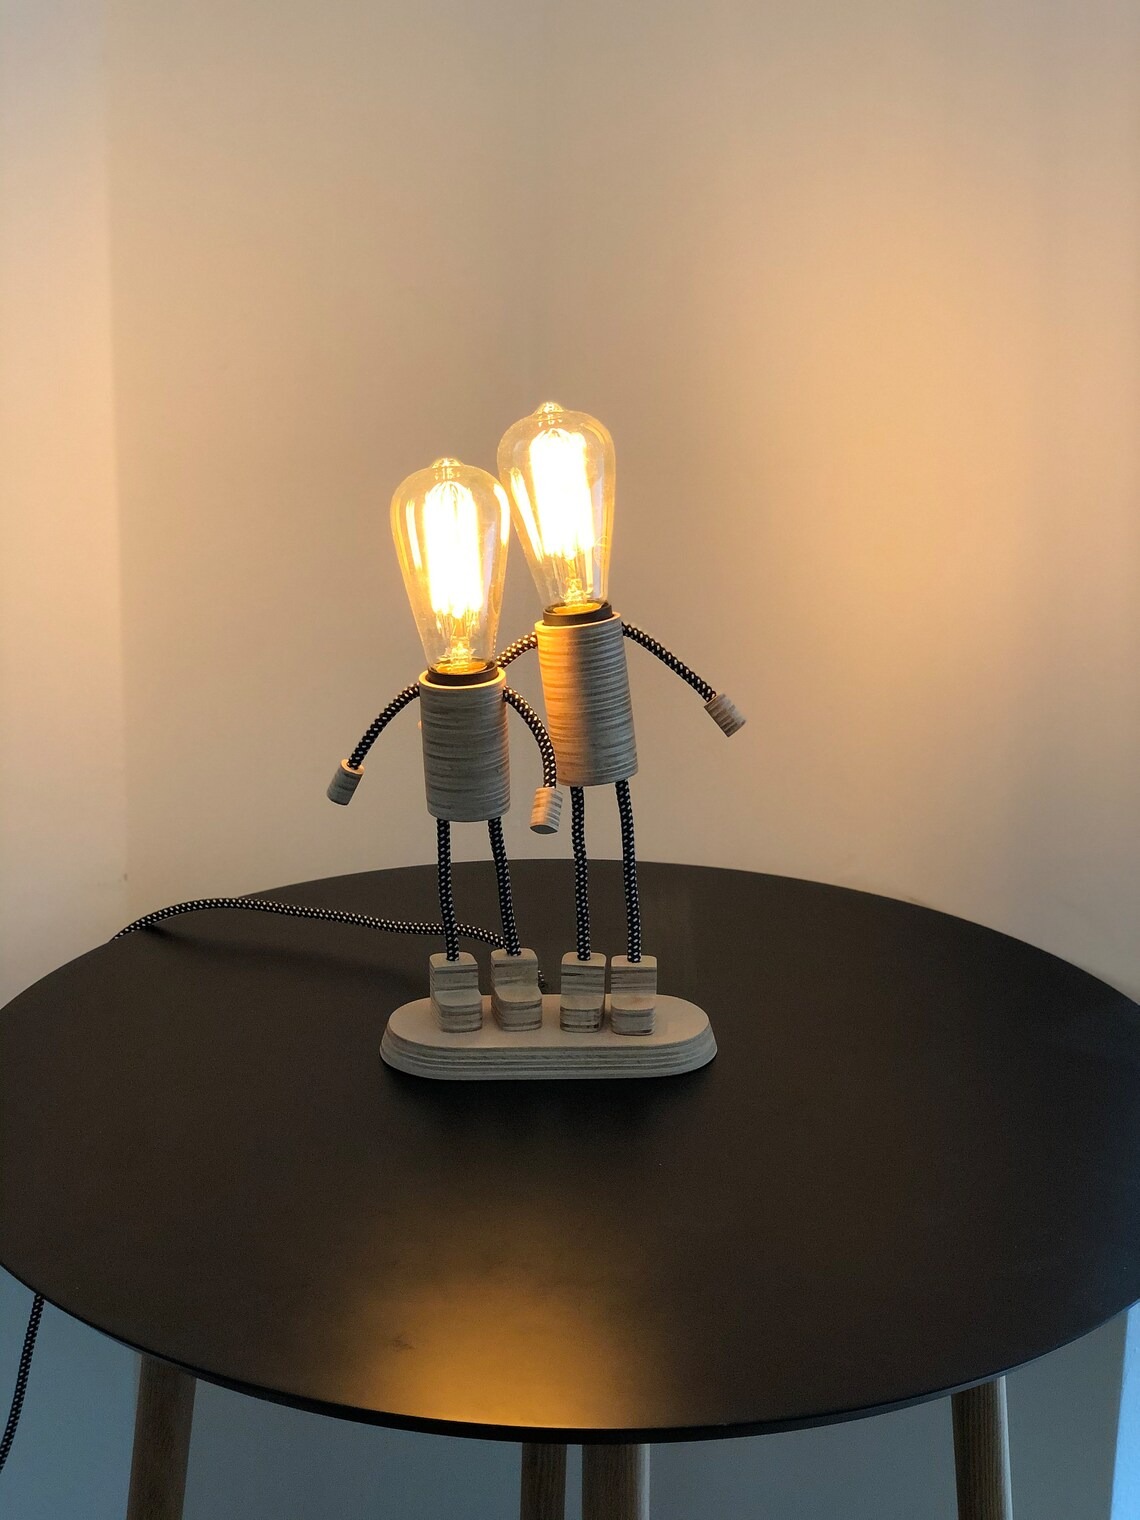 Creative Lamps Of Light Bulb Head Figures By Ivan Cvitkovic 25